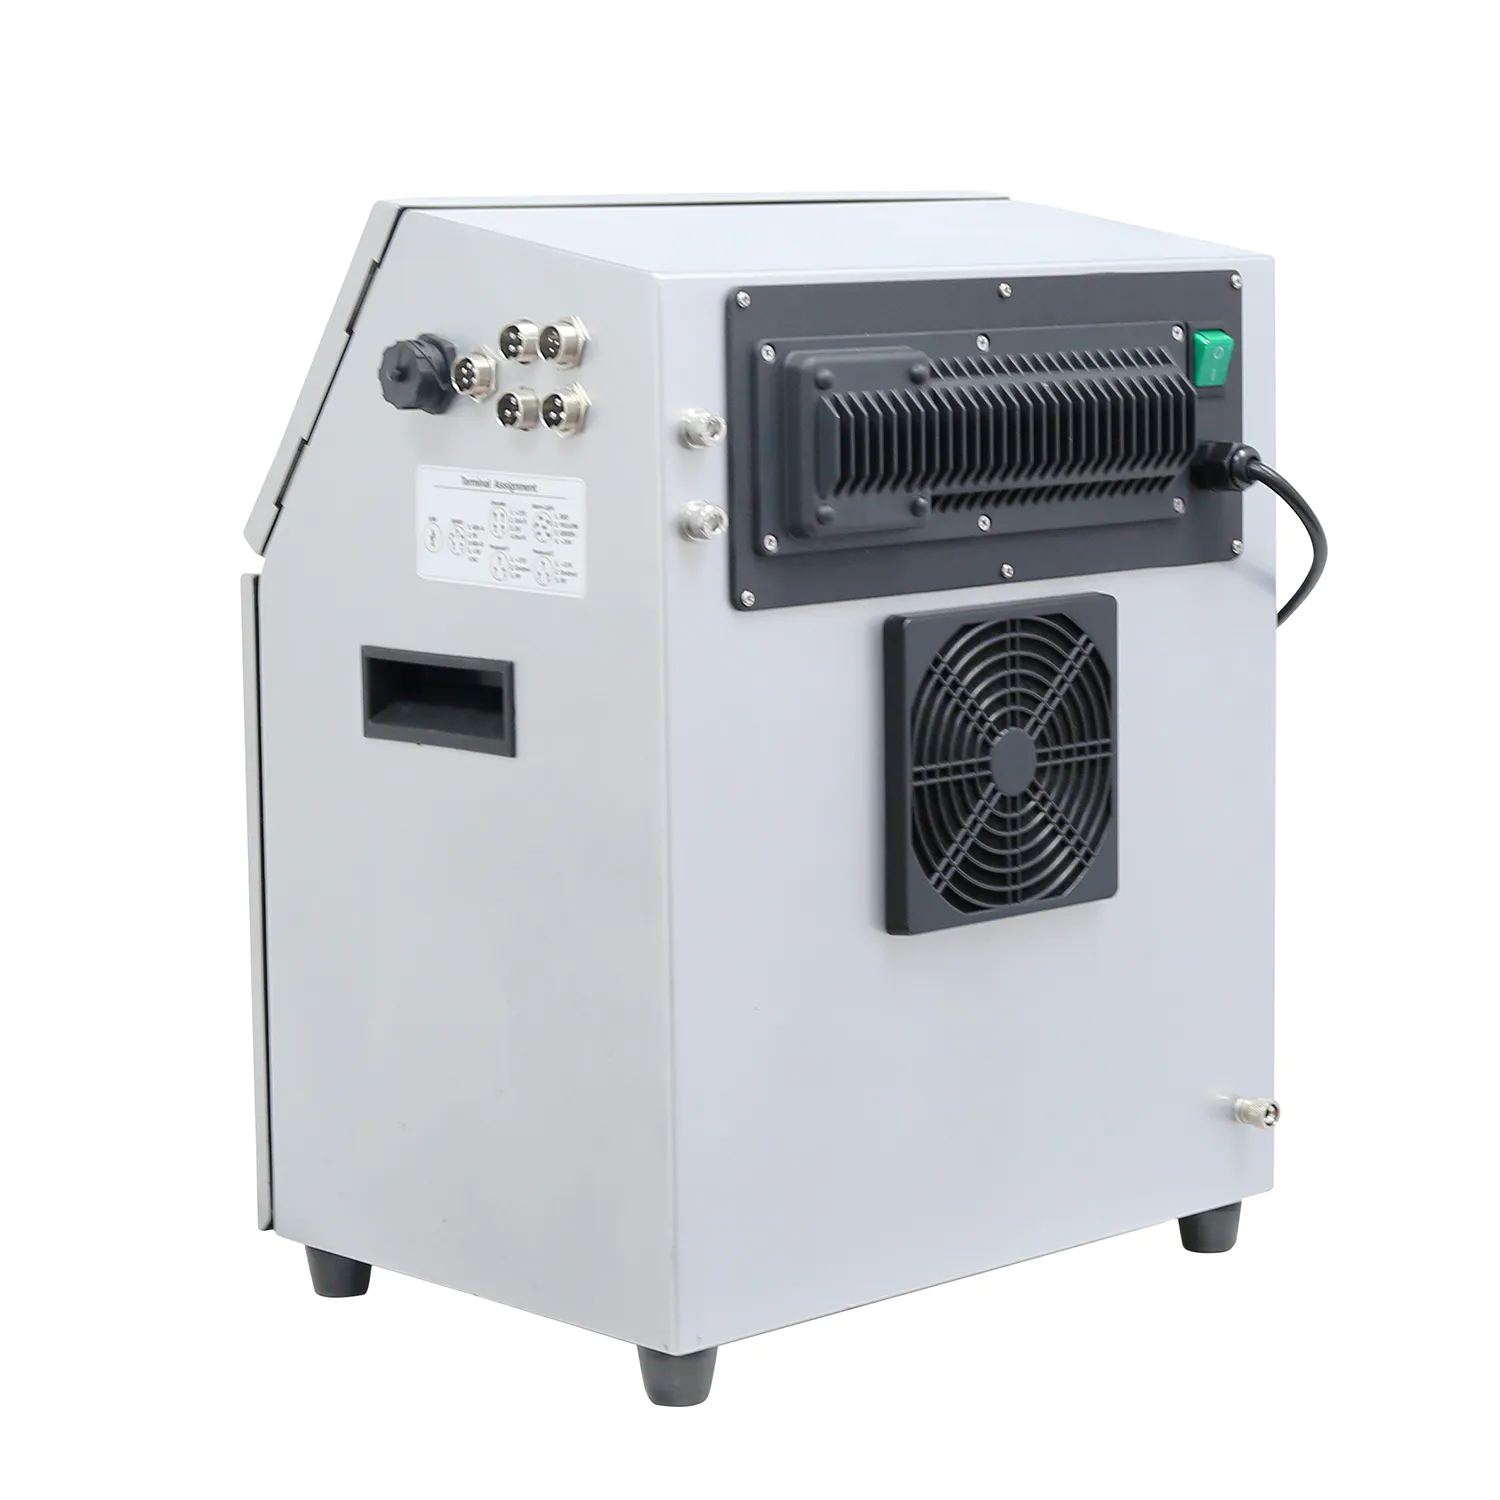 Leadtech Lt800 Thermal Inkjet Printer for Dating Printing